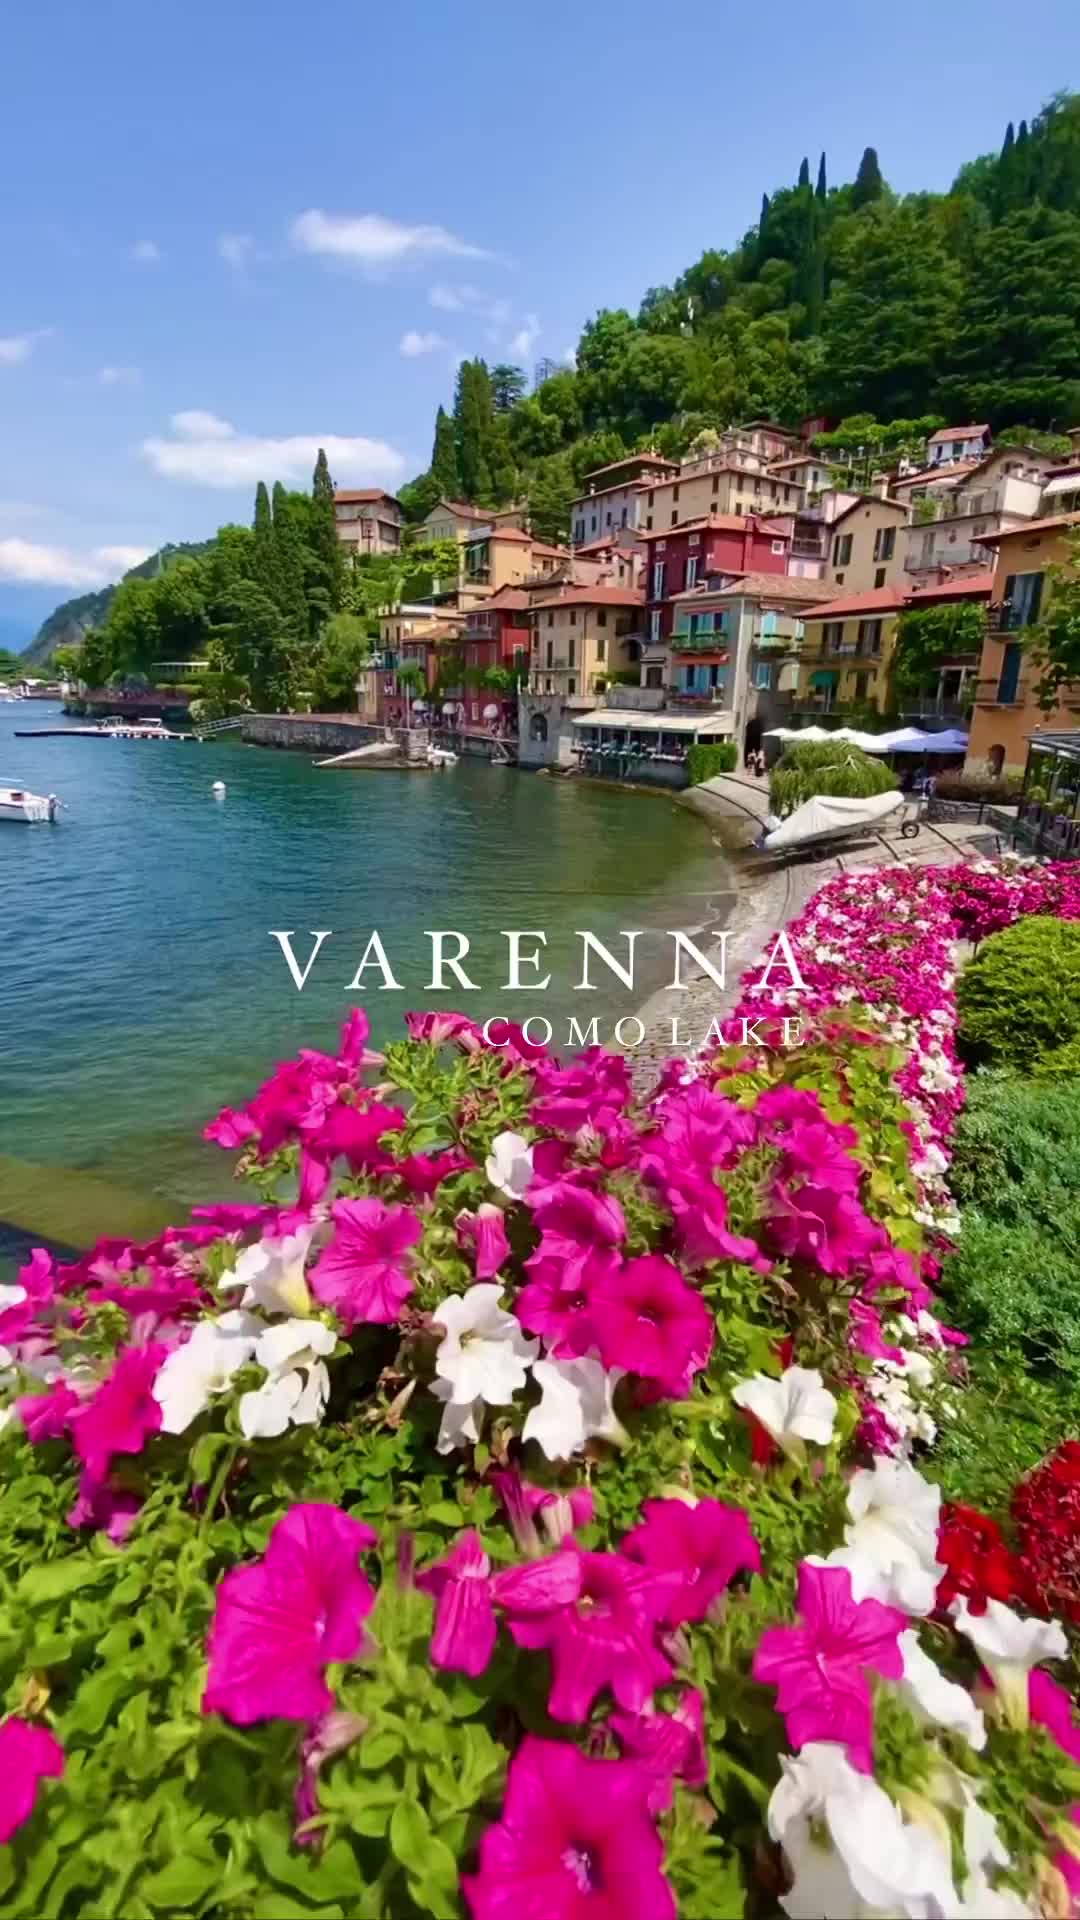 The magical #Varenna ✨

#lagodicomo #lakecomo #comolake #italia #italy